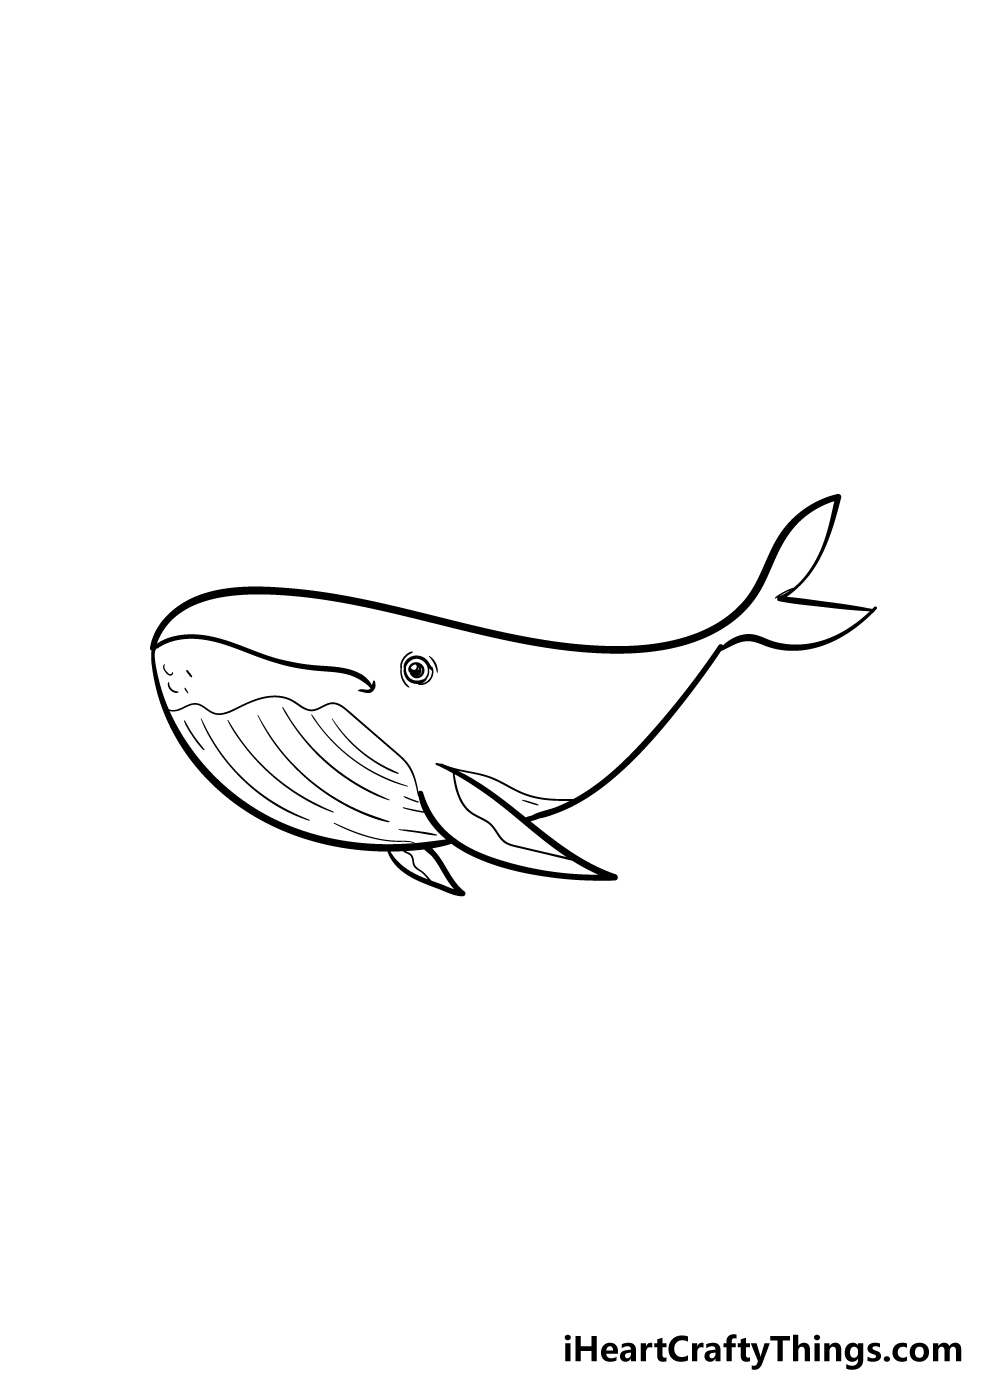 vẽ cá voi bước 5